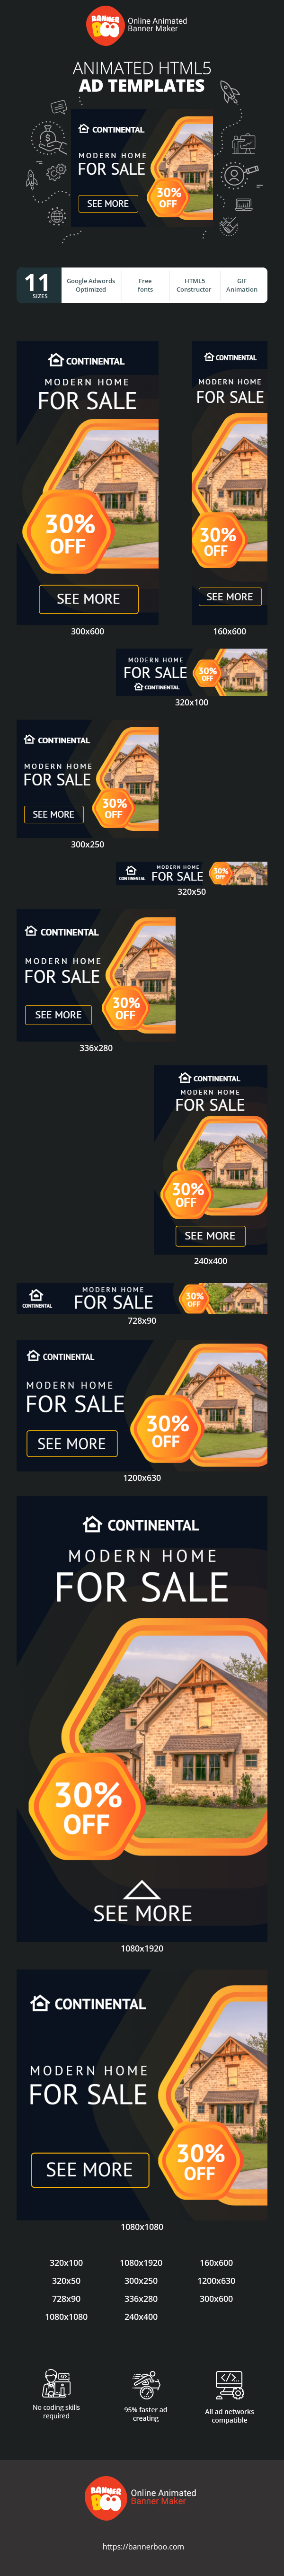 Szablon reklamy banerowej — Modern Home For Sale — 30% Off